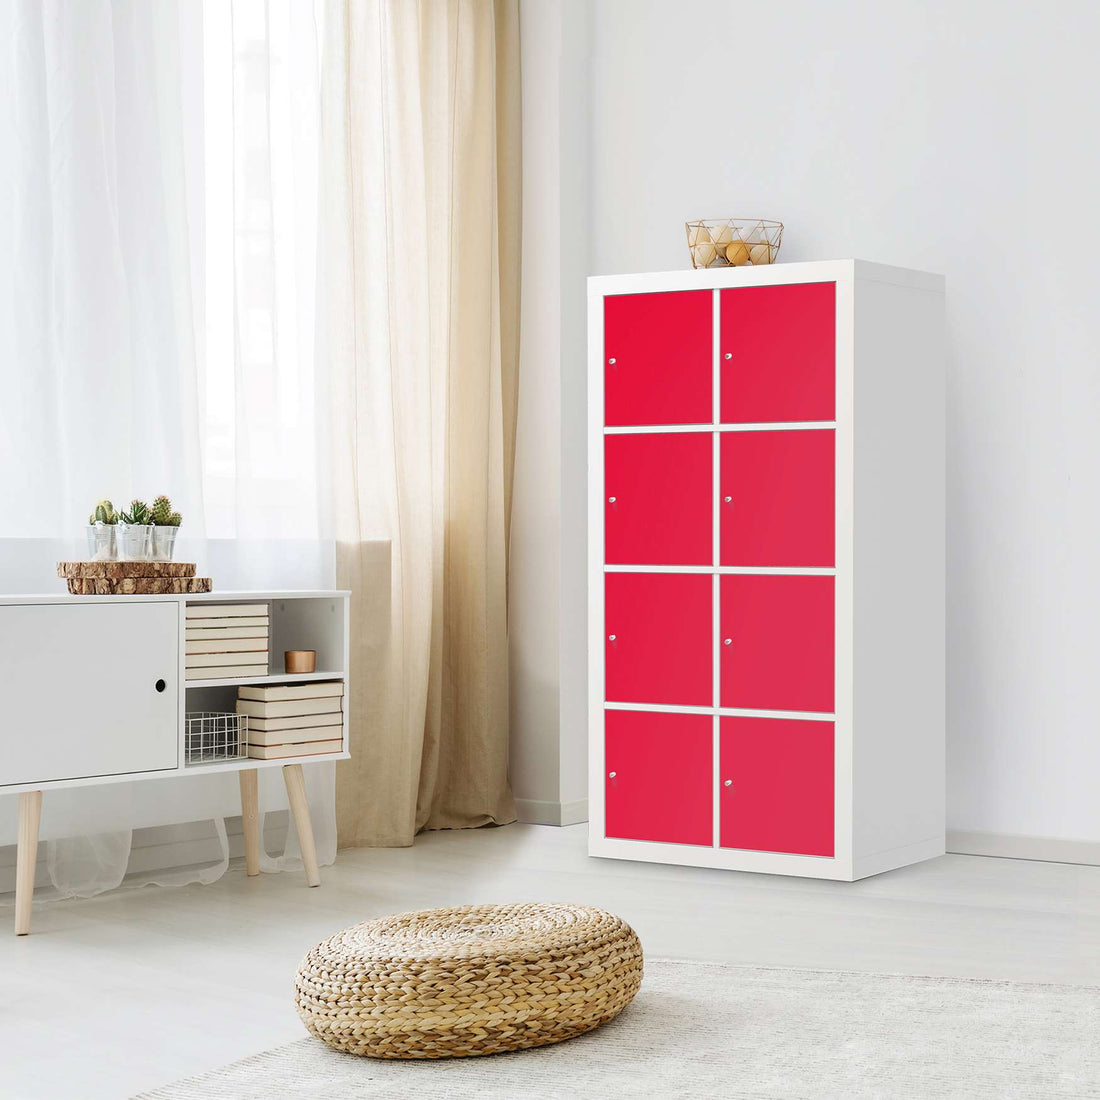 Klebefolie Rot Light - IKEA Expedit Regal 8 Türen - Wohnzimmer